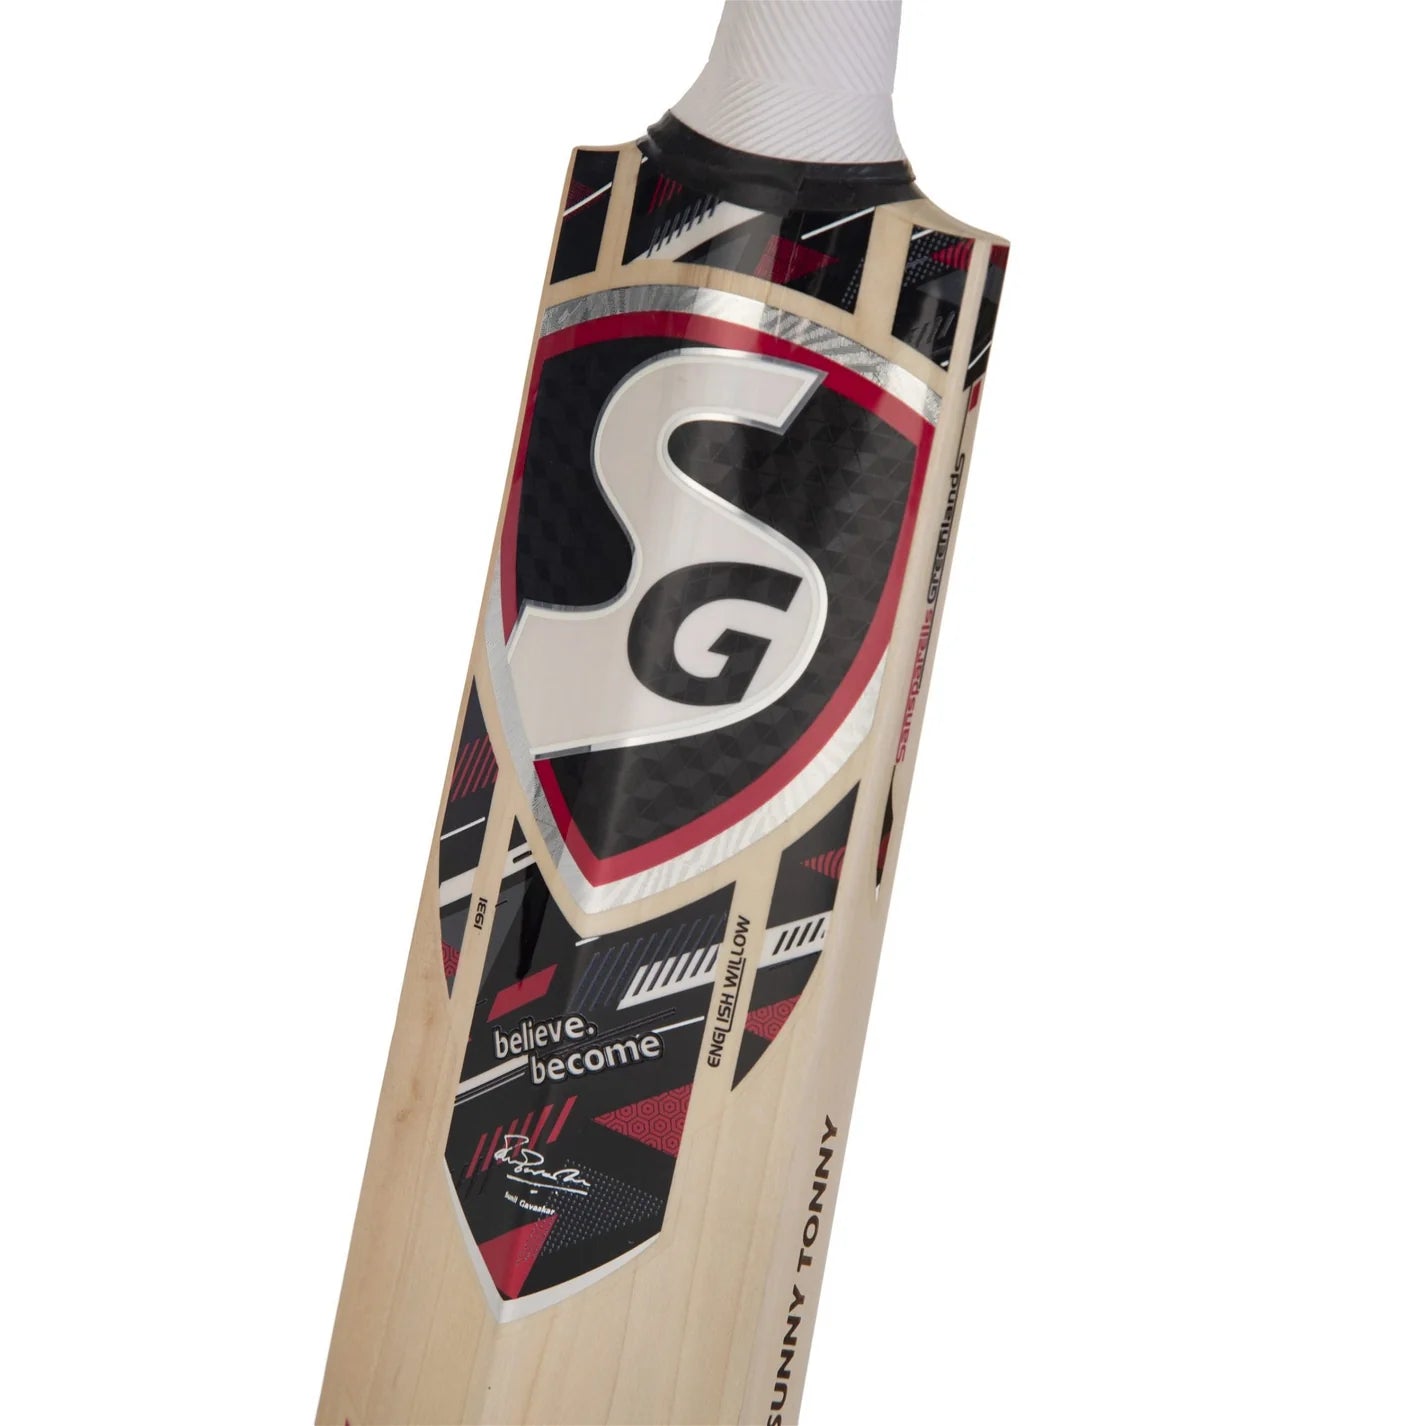 SG Sunny Tonny™ English Willow grade 2 Cricket Bat